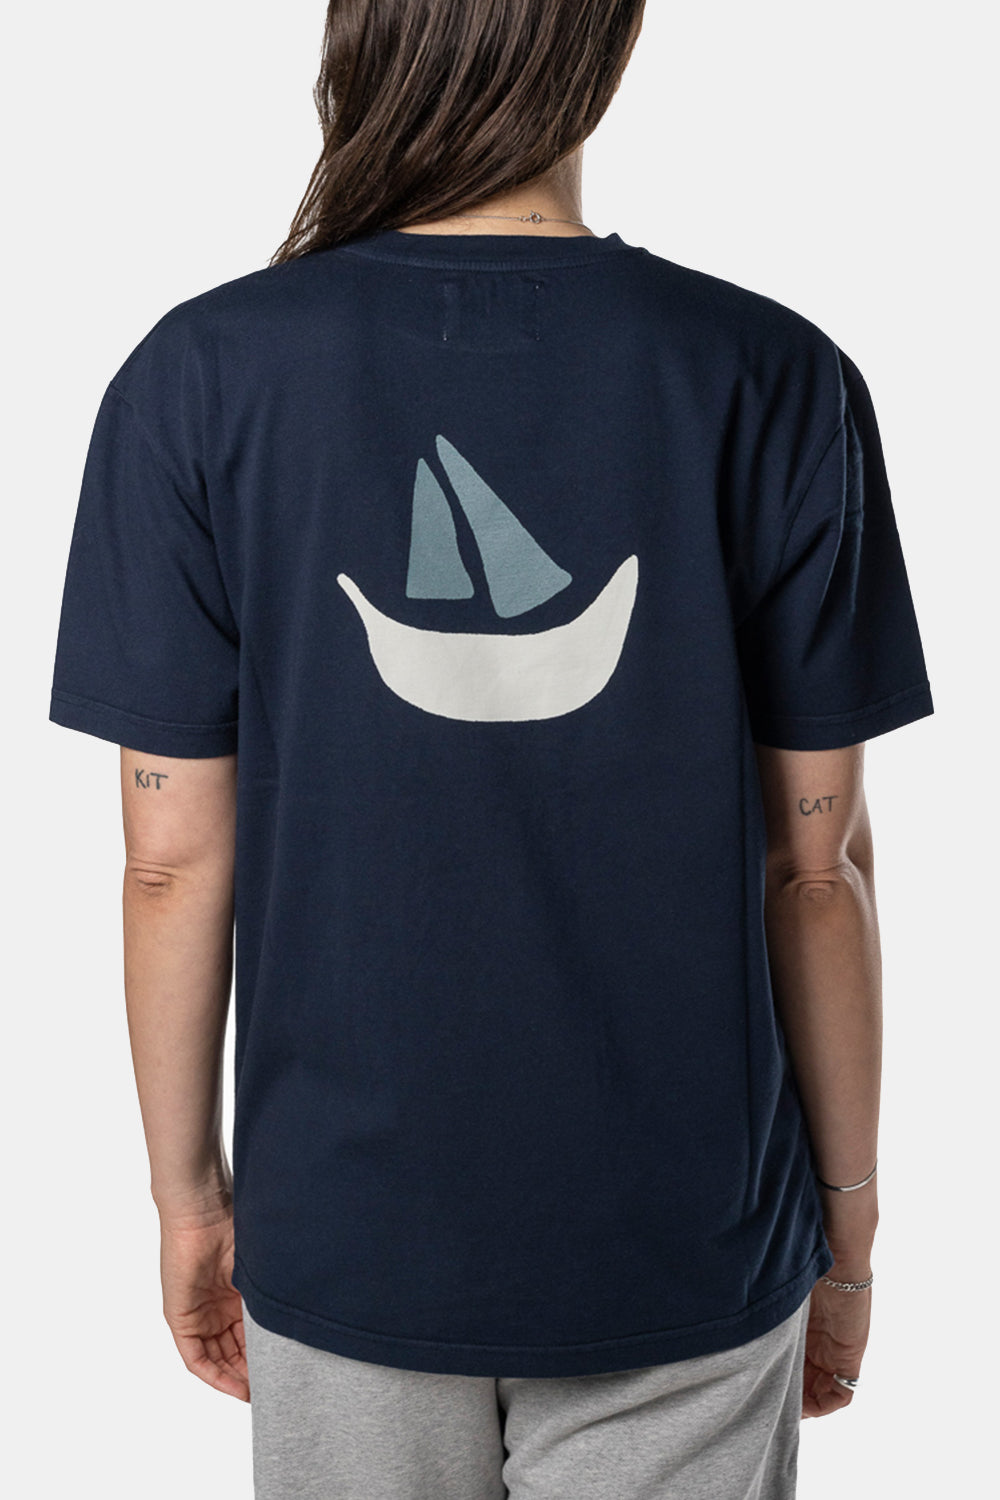 La Paz Dantas T-Shirt (Boat Dark Navy)